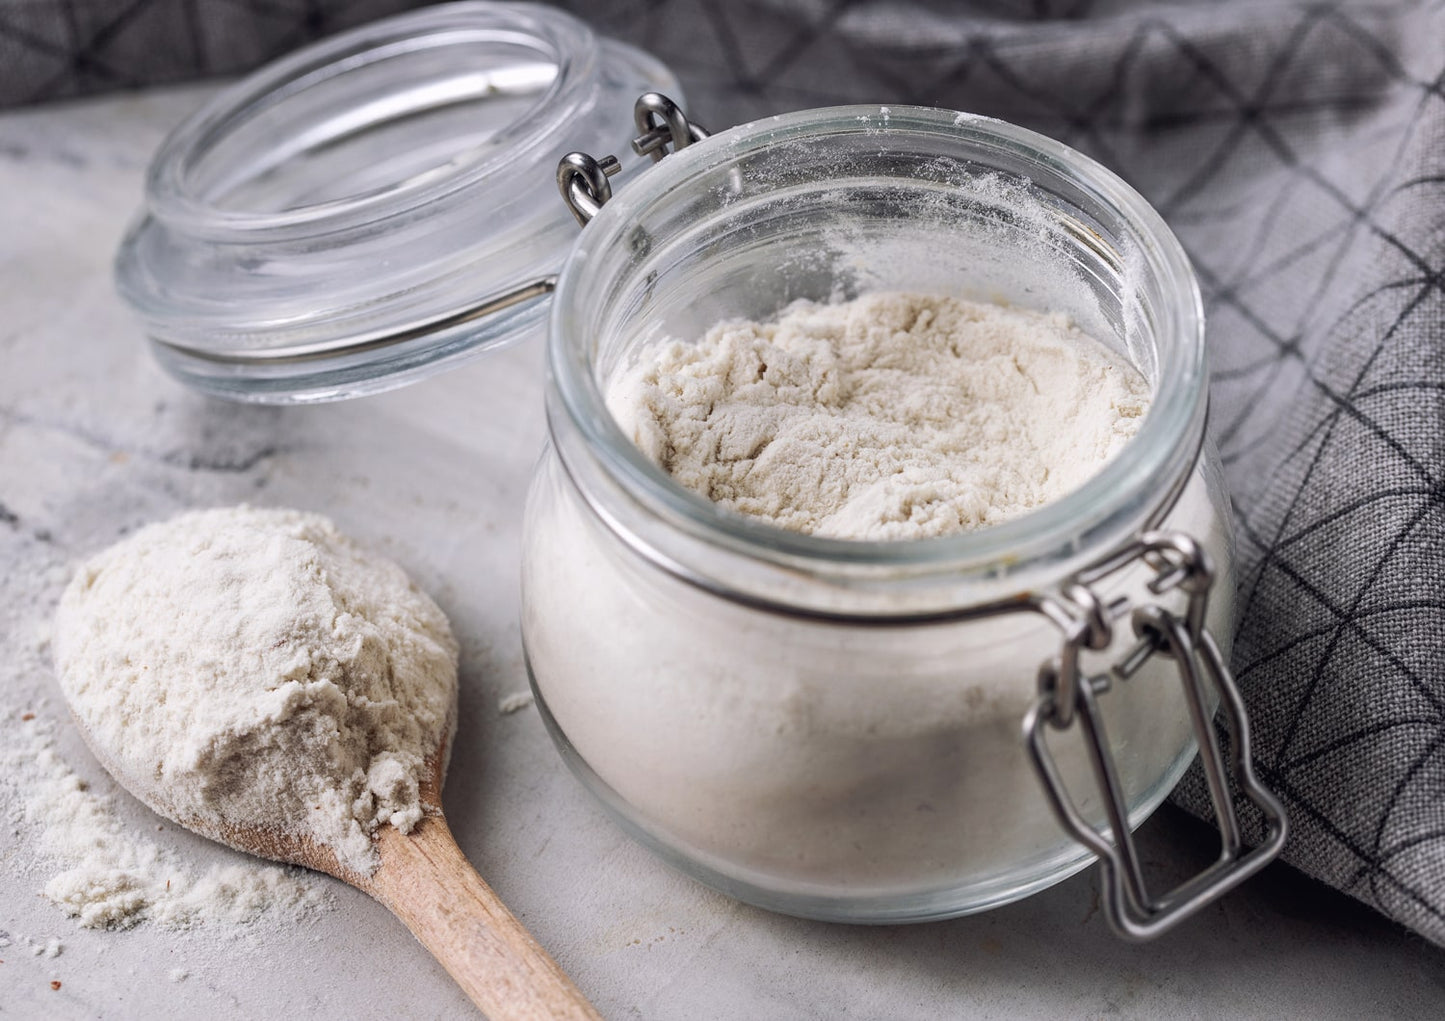 Organic Guar Gum Powder — Great Thickener & Binder, Food Grade, Perfect for Baking, Non-GMO, Kosher, Vegan, Bulk - by Food to Live